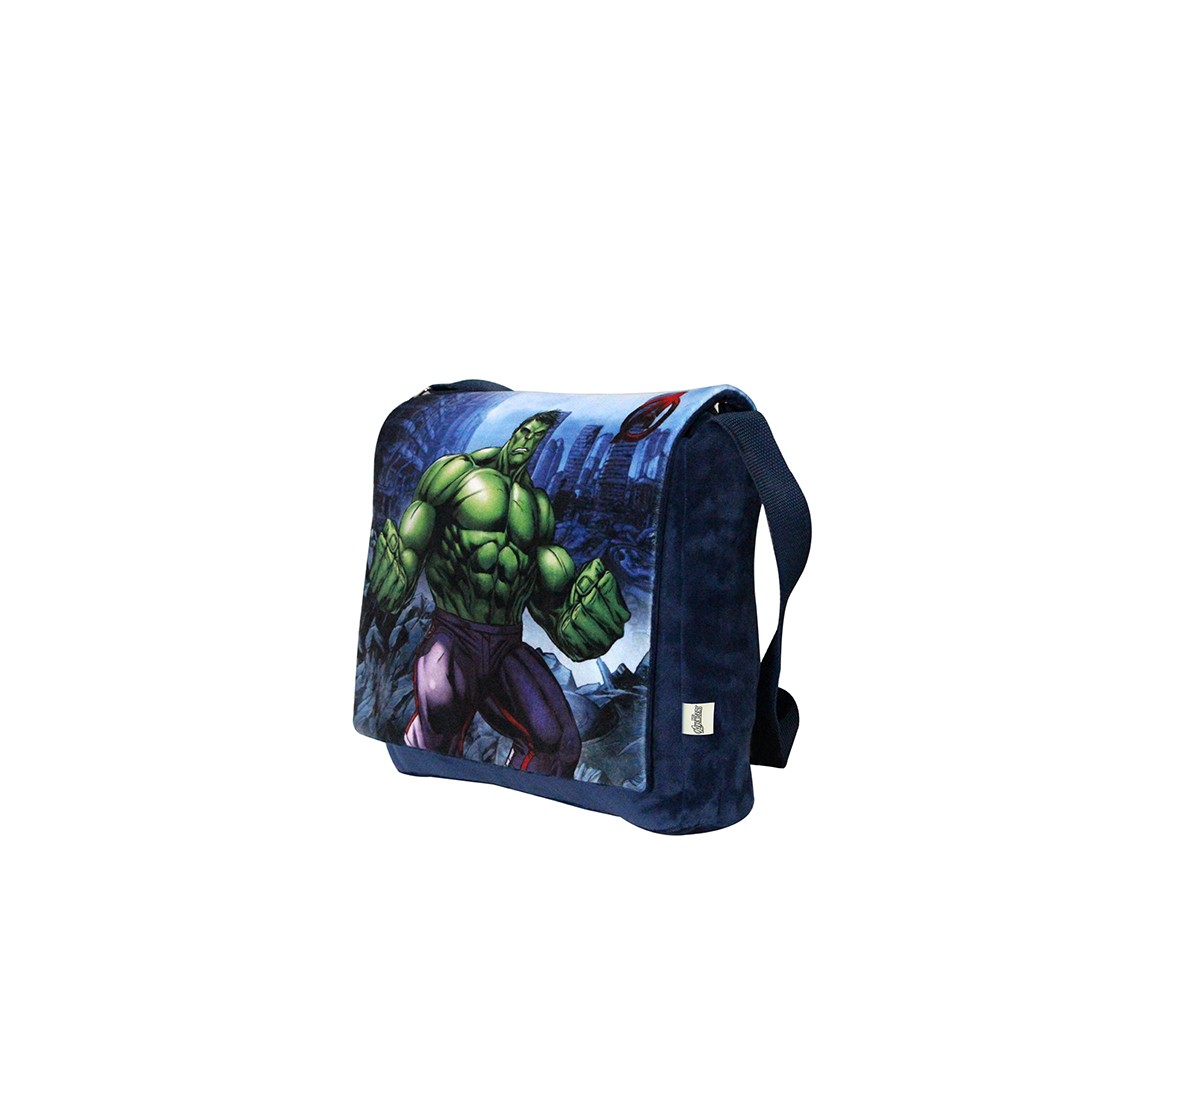 Marvel Disney Happiness Zipper Closure Hulk Sling Bag_Multi_Free Size Plush Accessories for Kids age 12M+ - 25.4 Cm 